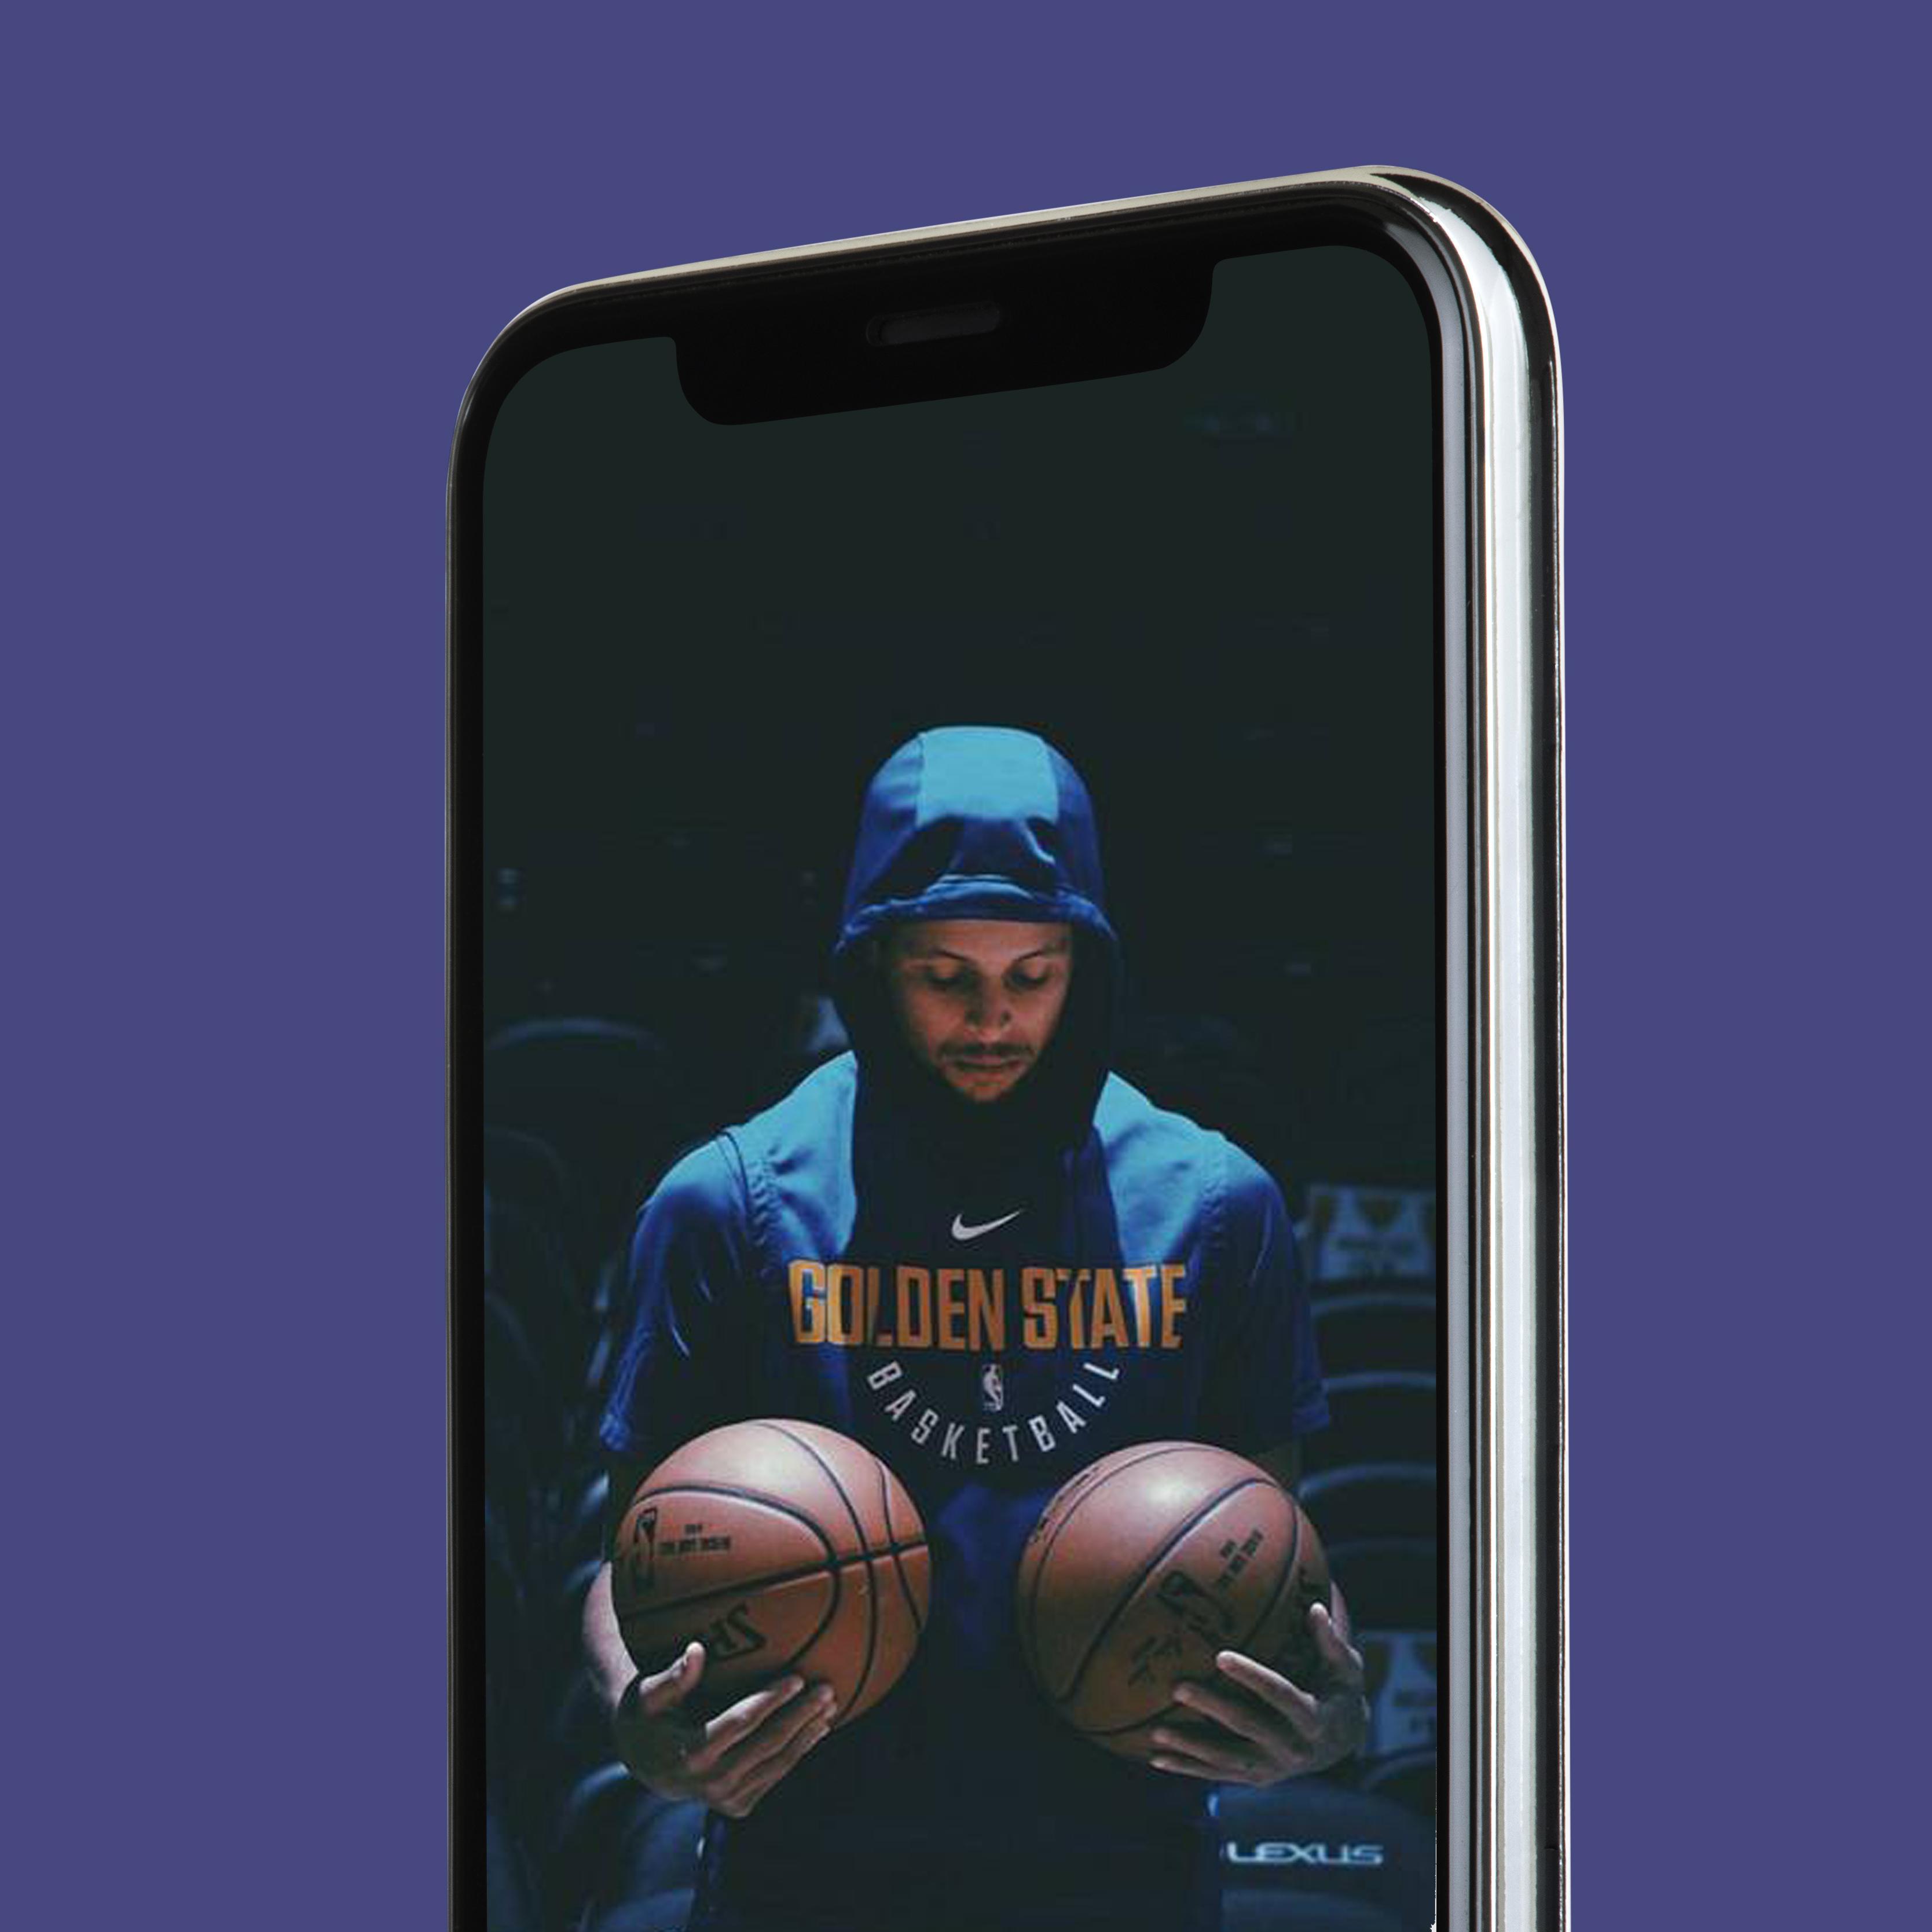 Nba Wallpaper HD Basketball Image For Android Apk